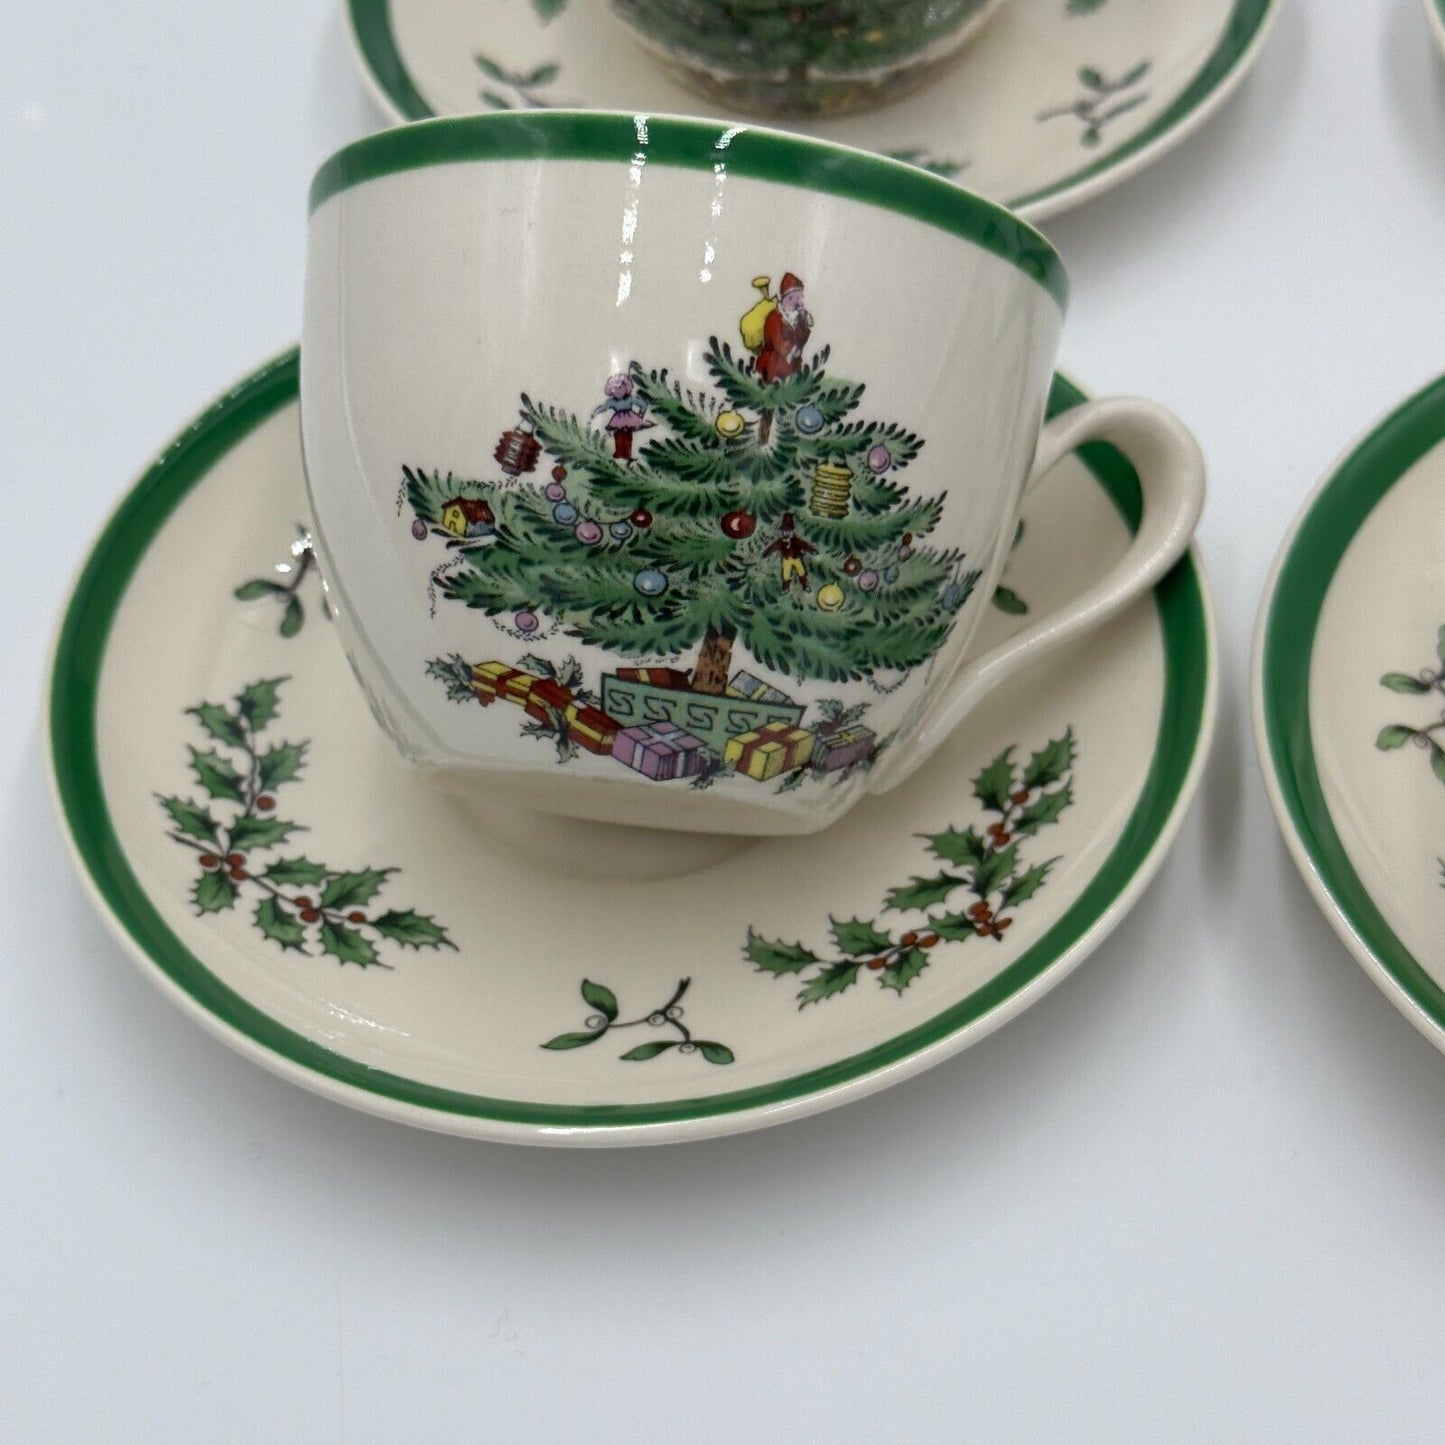 Spode Christmas Tree Cup And Saucer Set 1980s England Mint Vintage